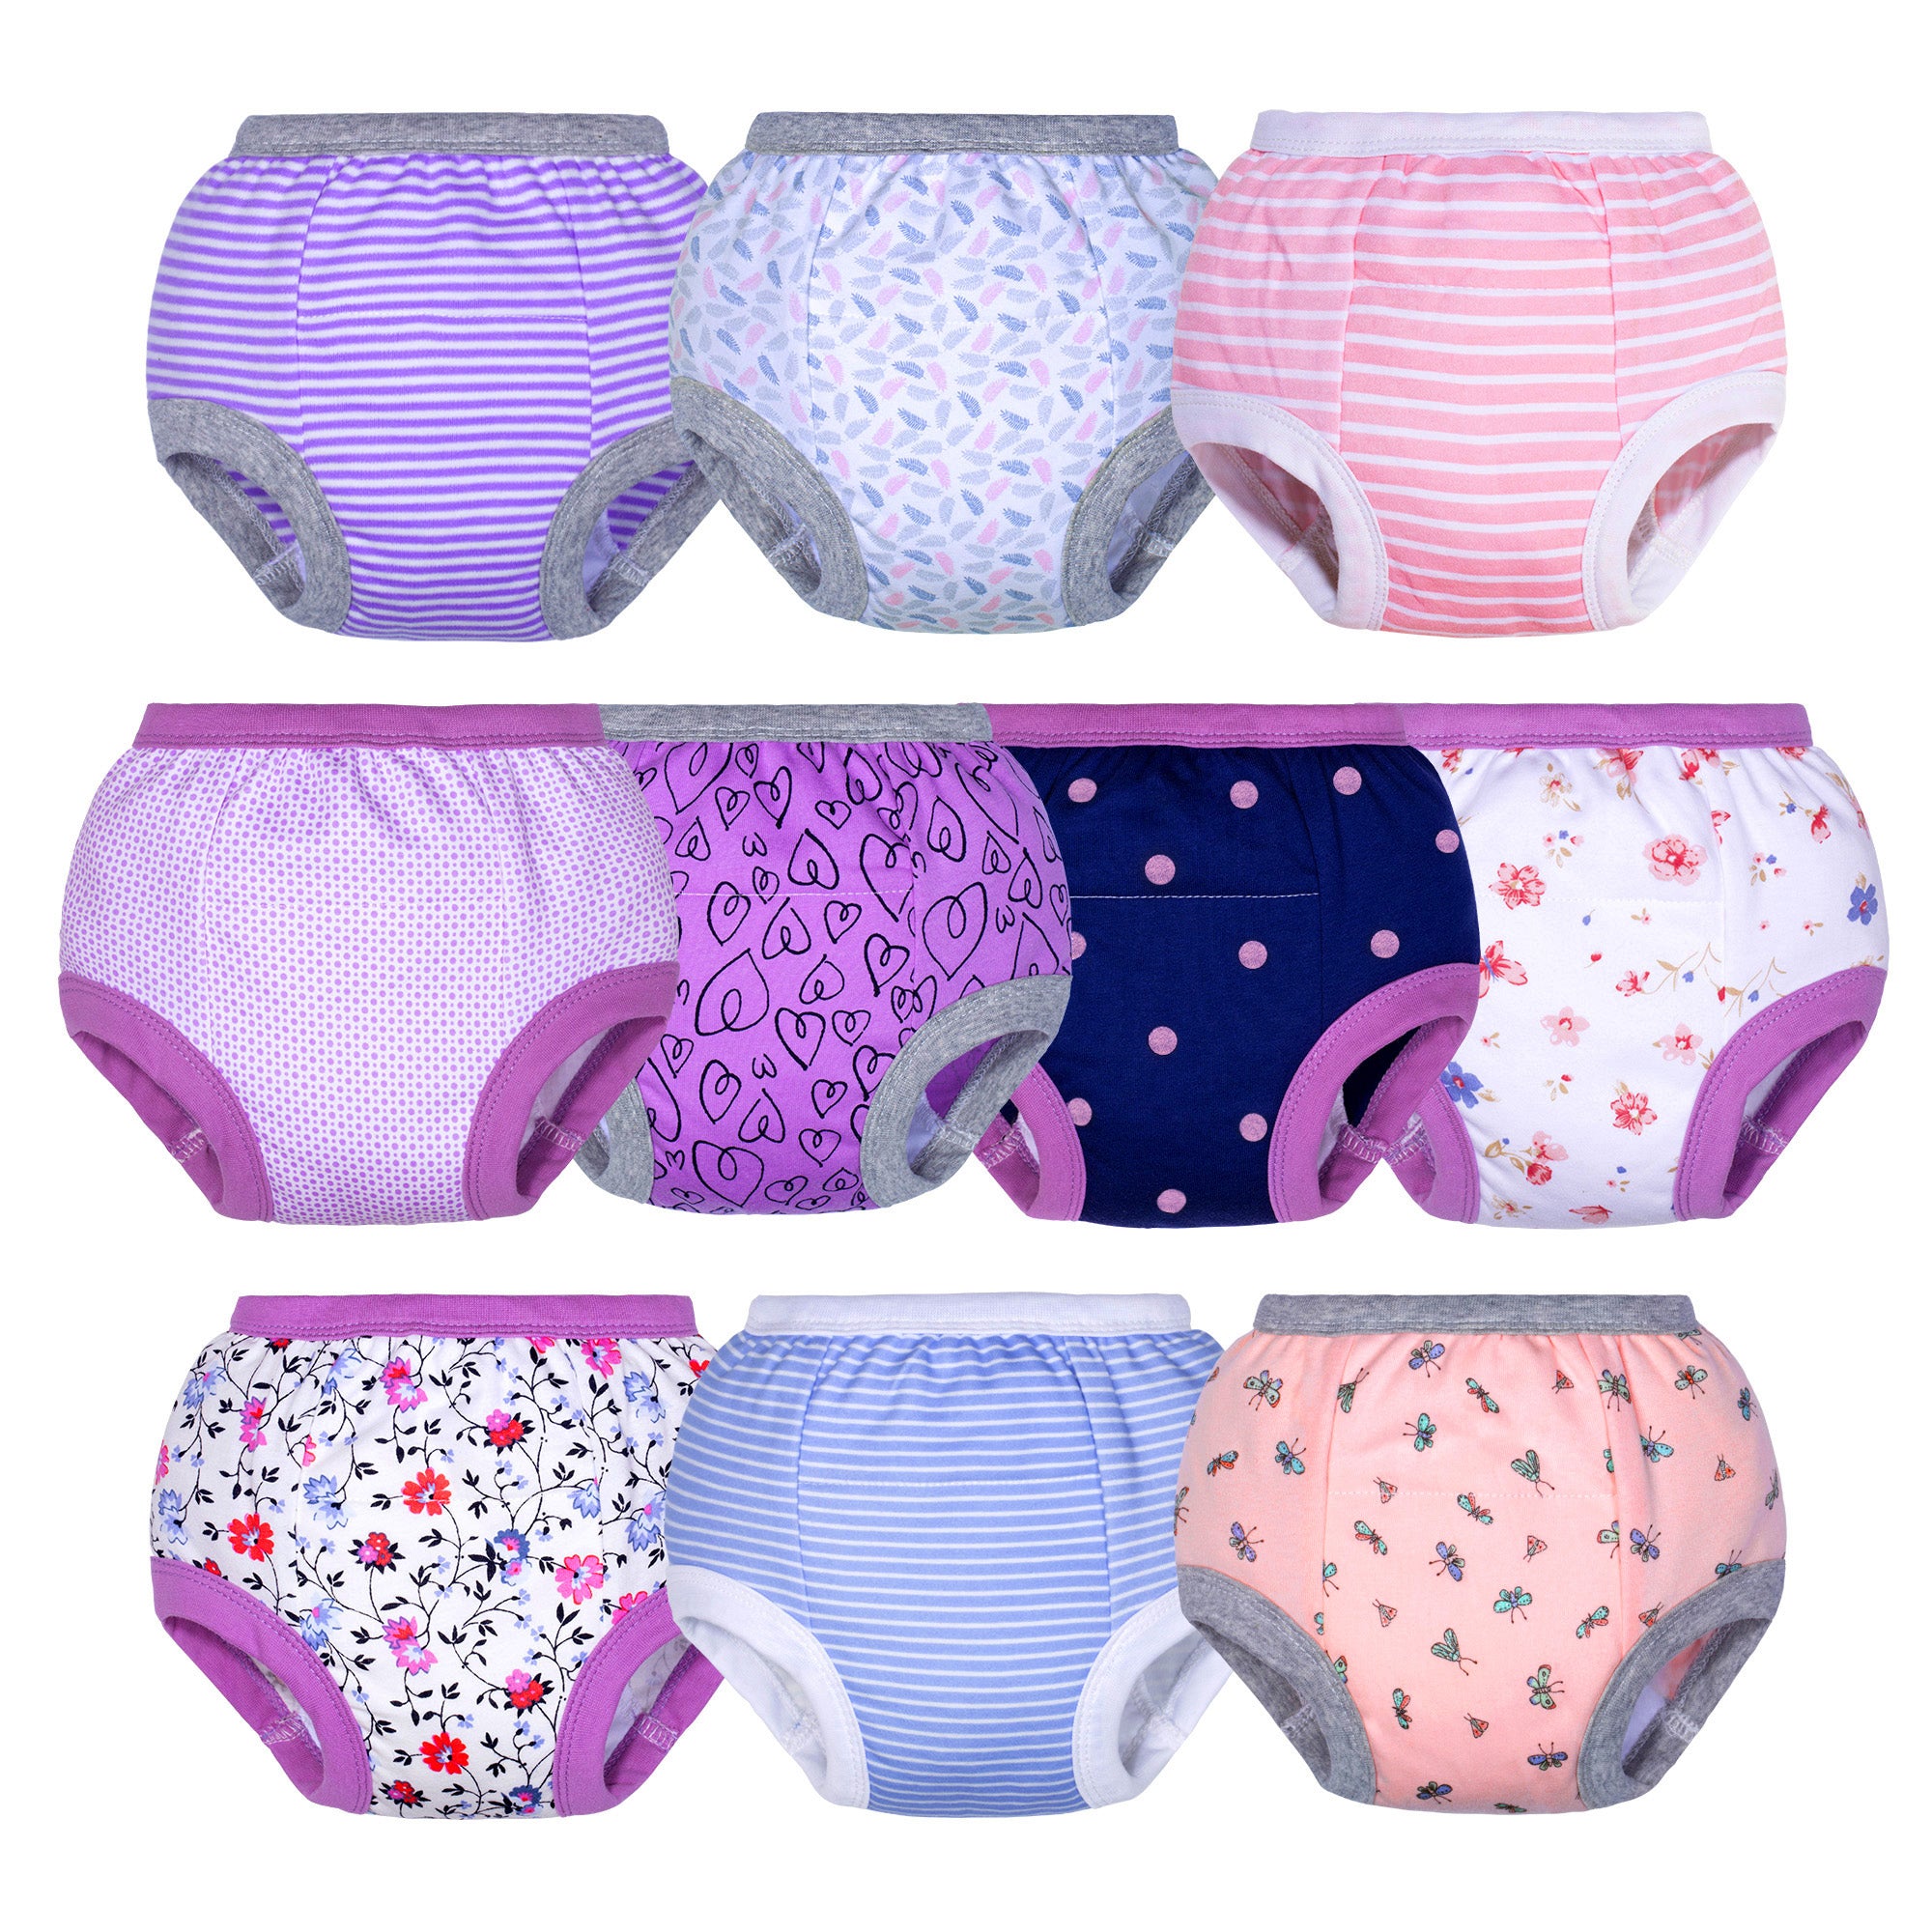 10pcs Baby Girls Training Underwear For Toddler Cotton Training